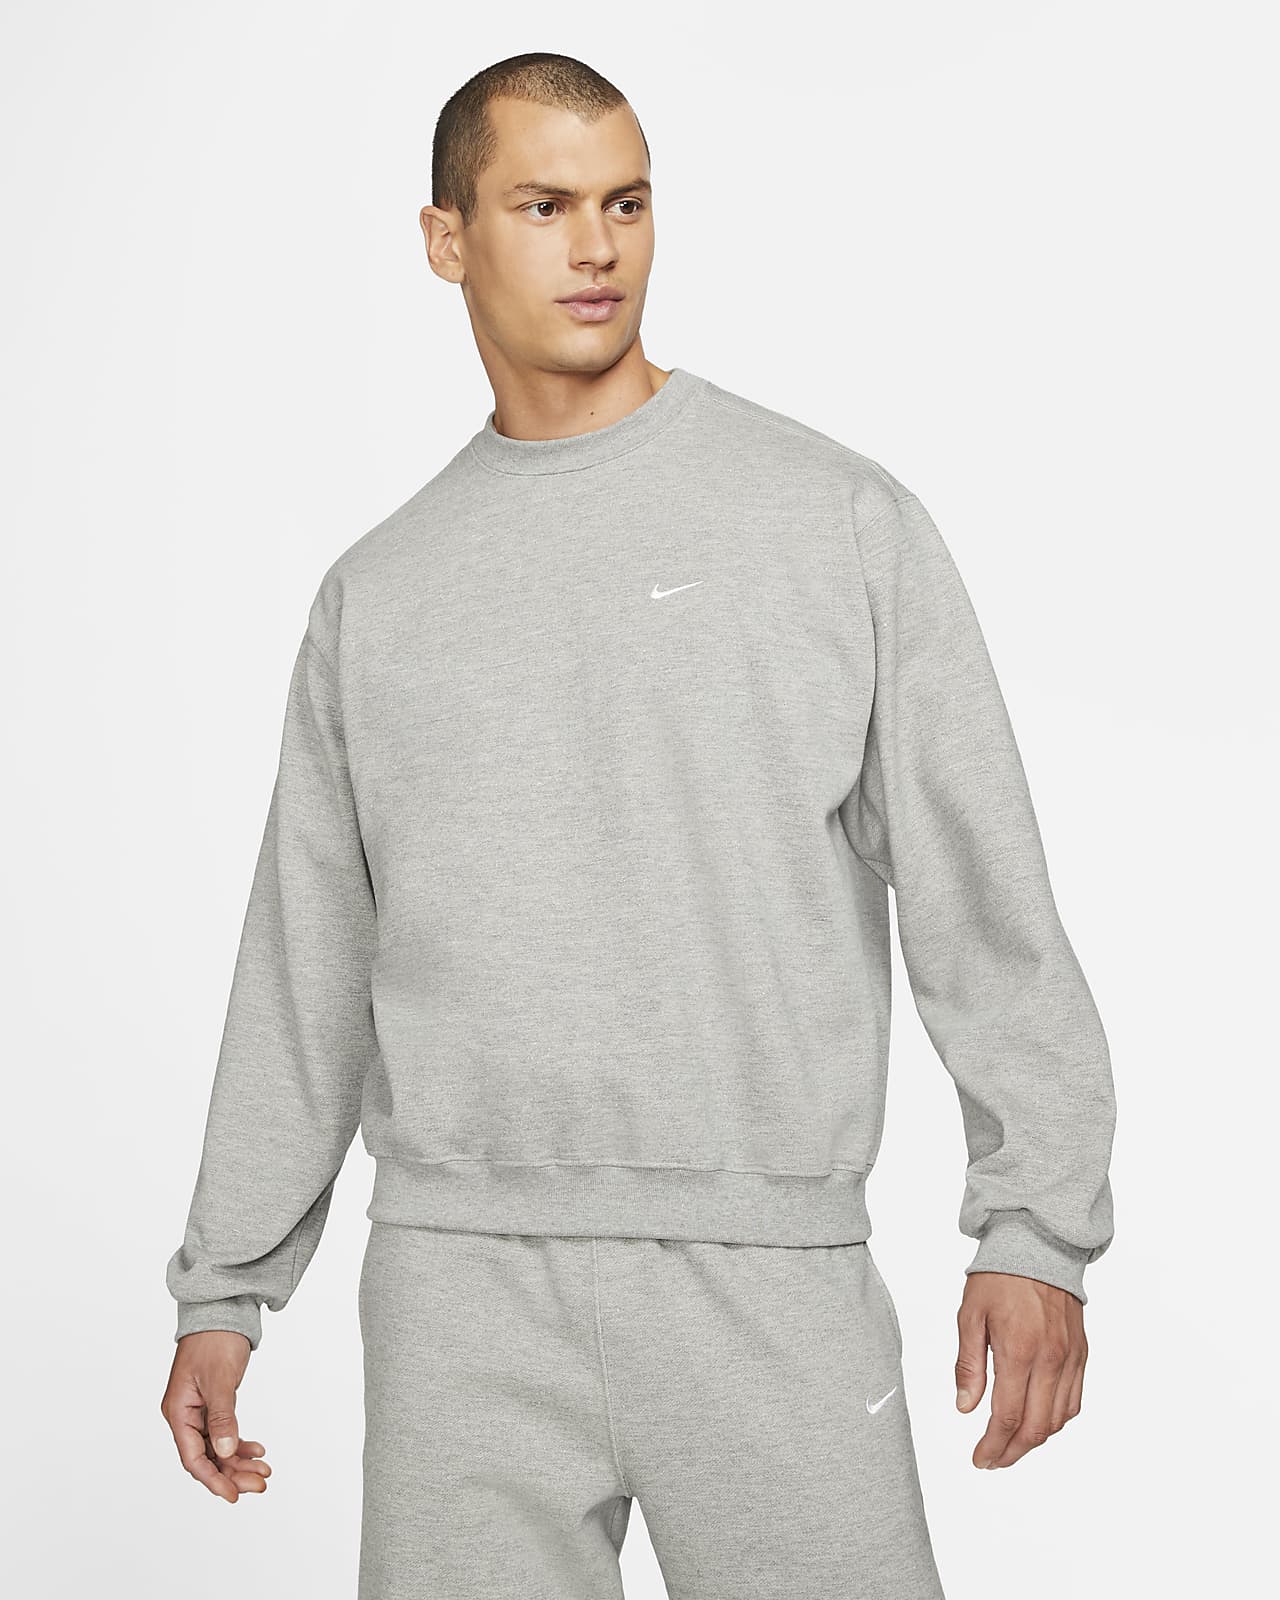 Nike "Made In the Men's Sweatshirt. Nike.com